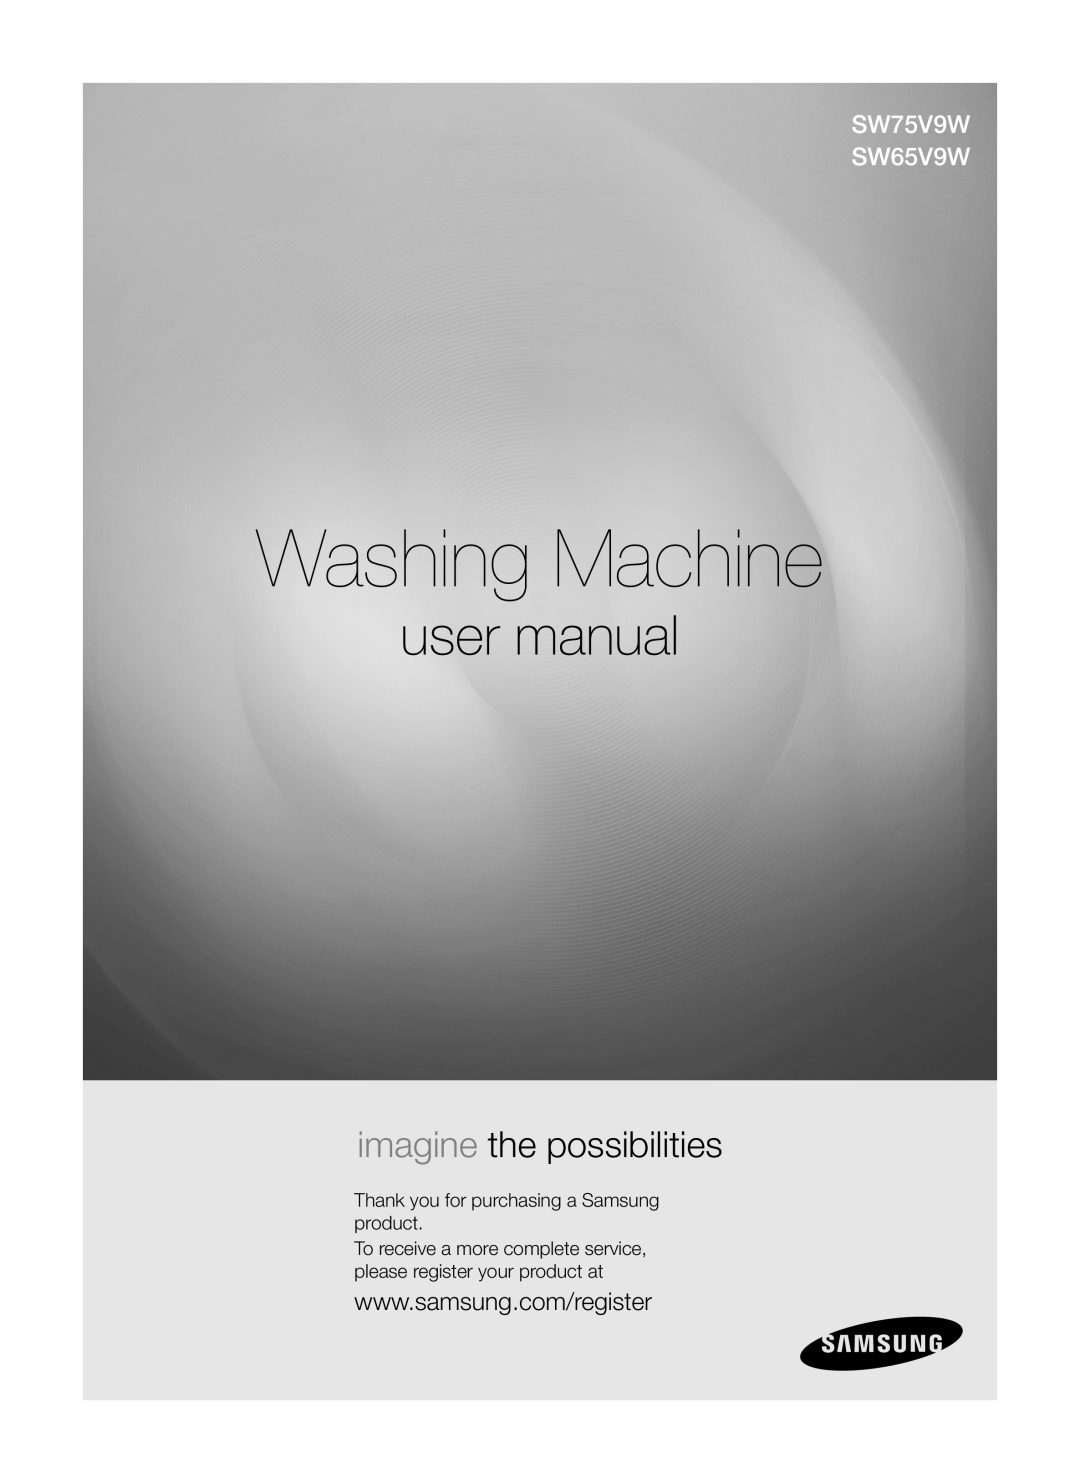 Samsung user manual Washing Machine, imagine the possibilities, SW75V9W SW65V9W 